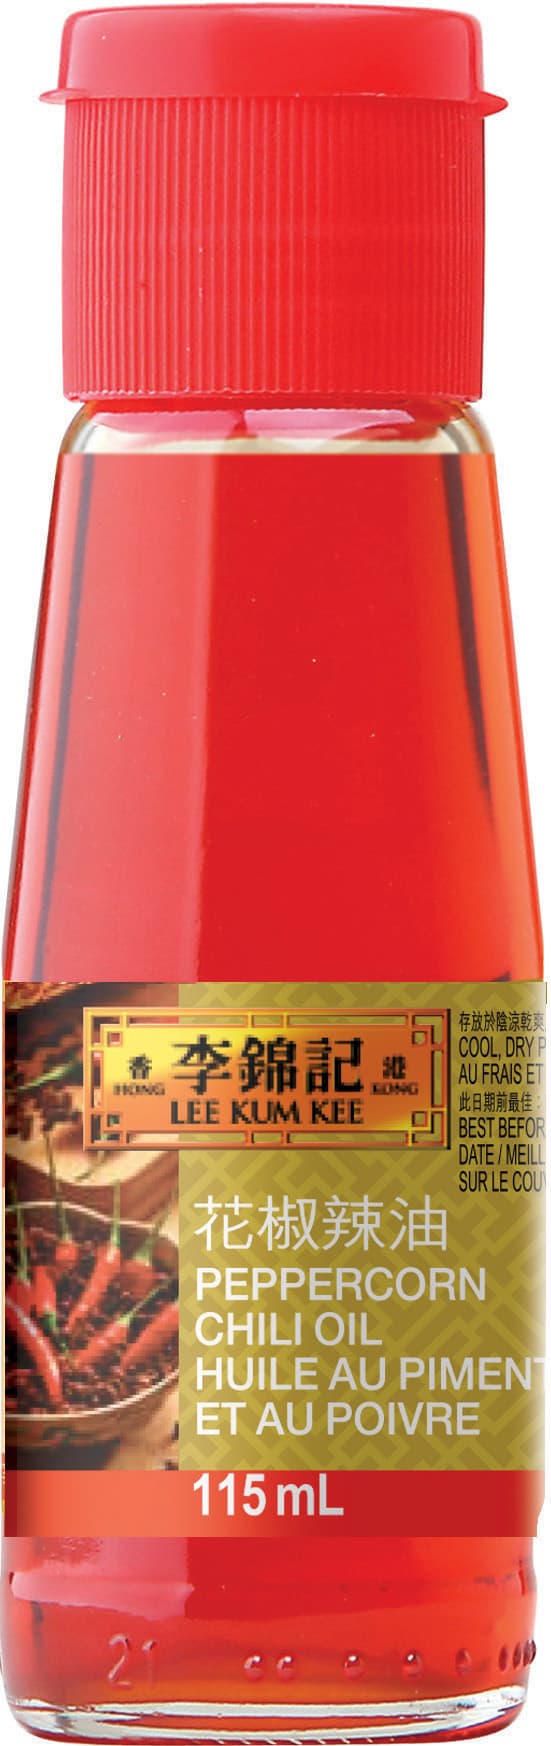 Peppercorn Chili Oil 115ml 